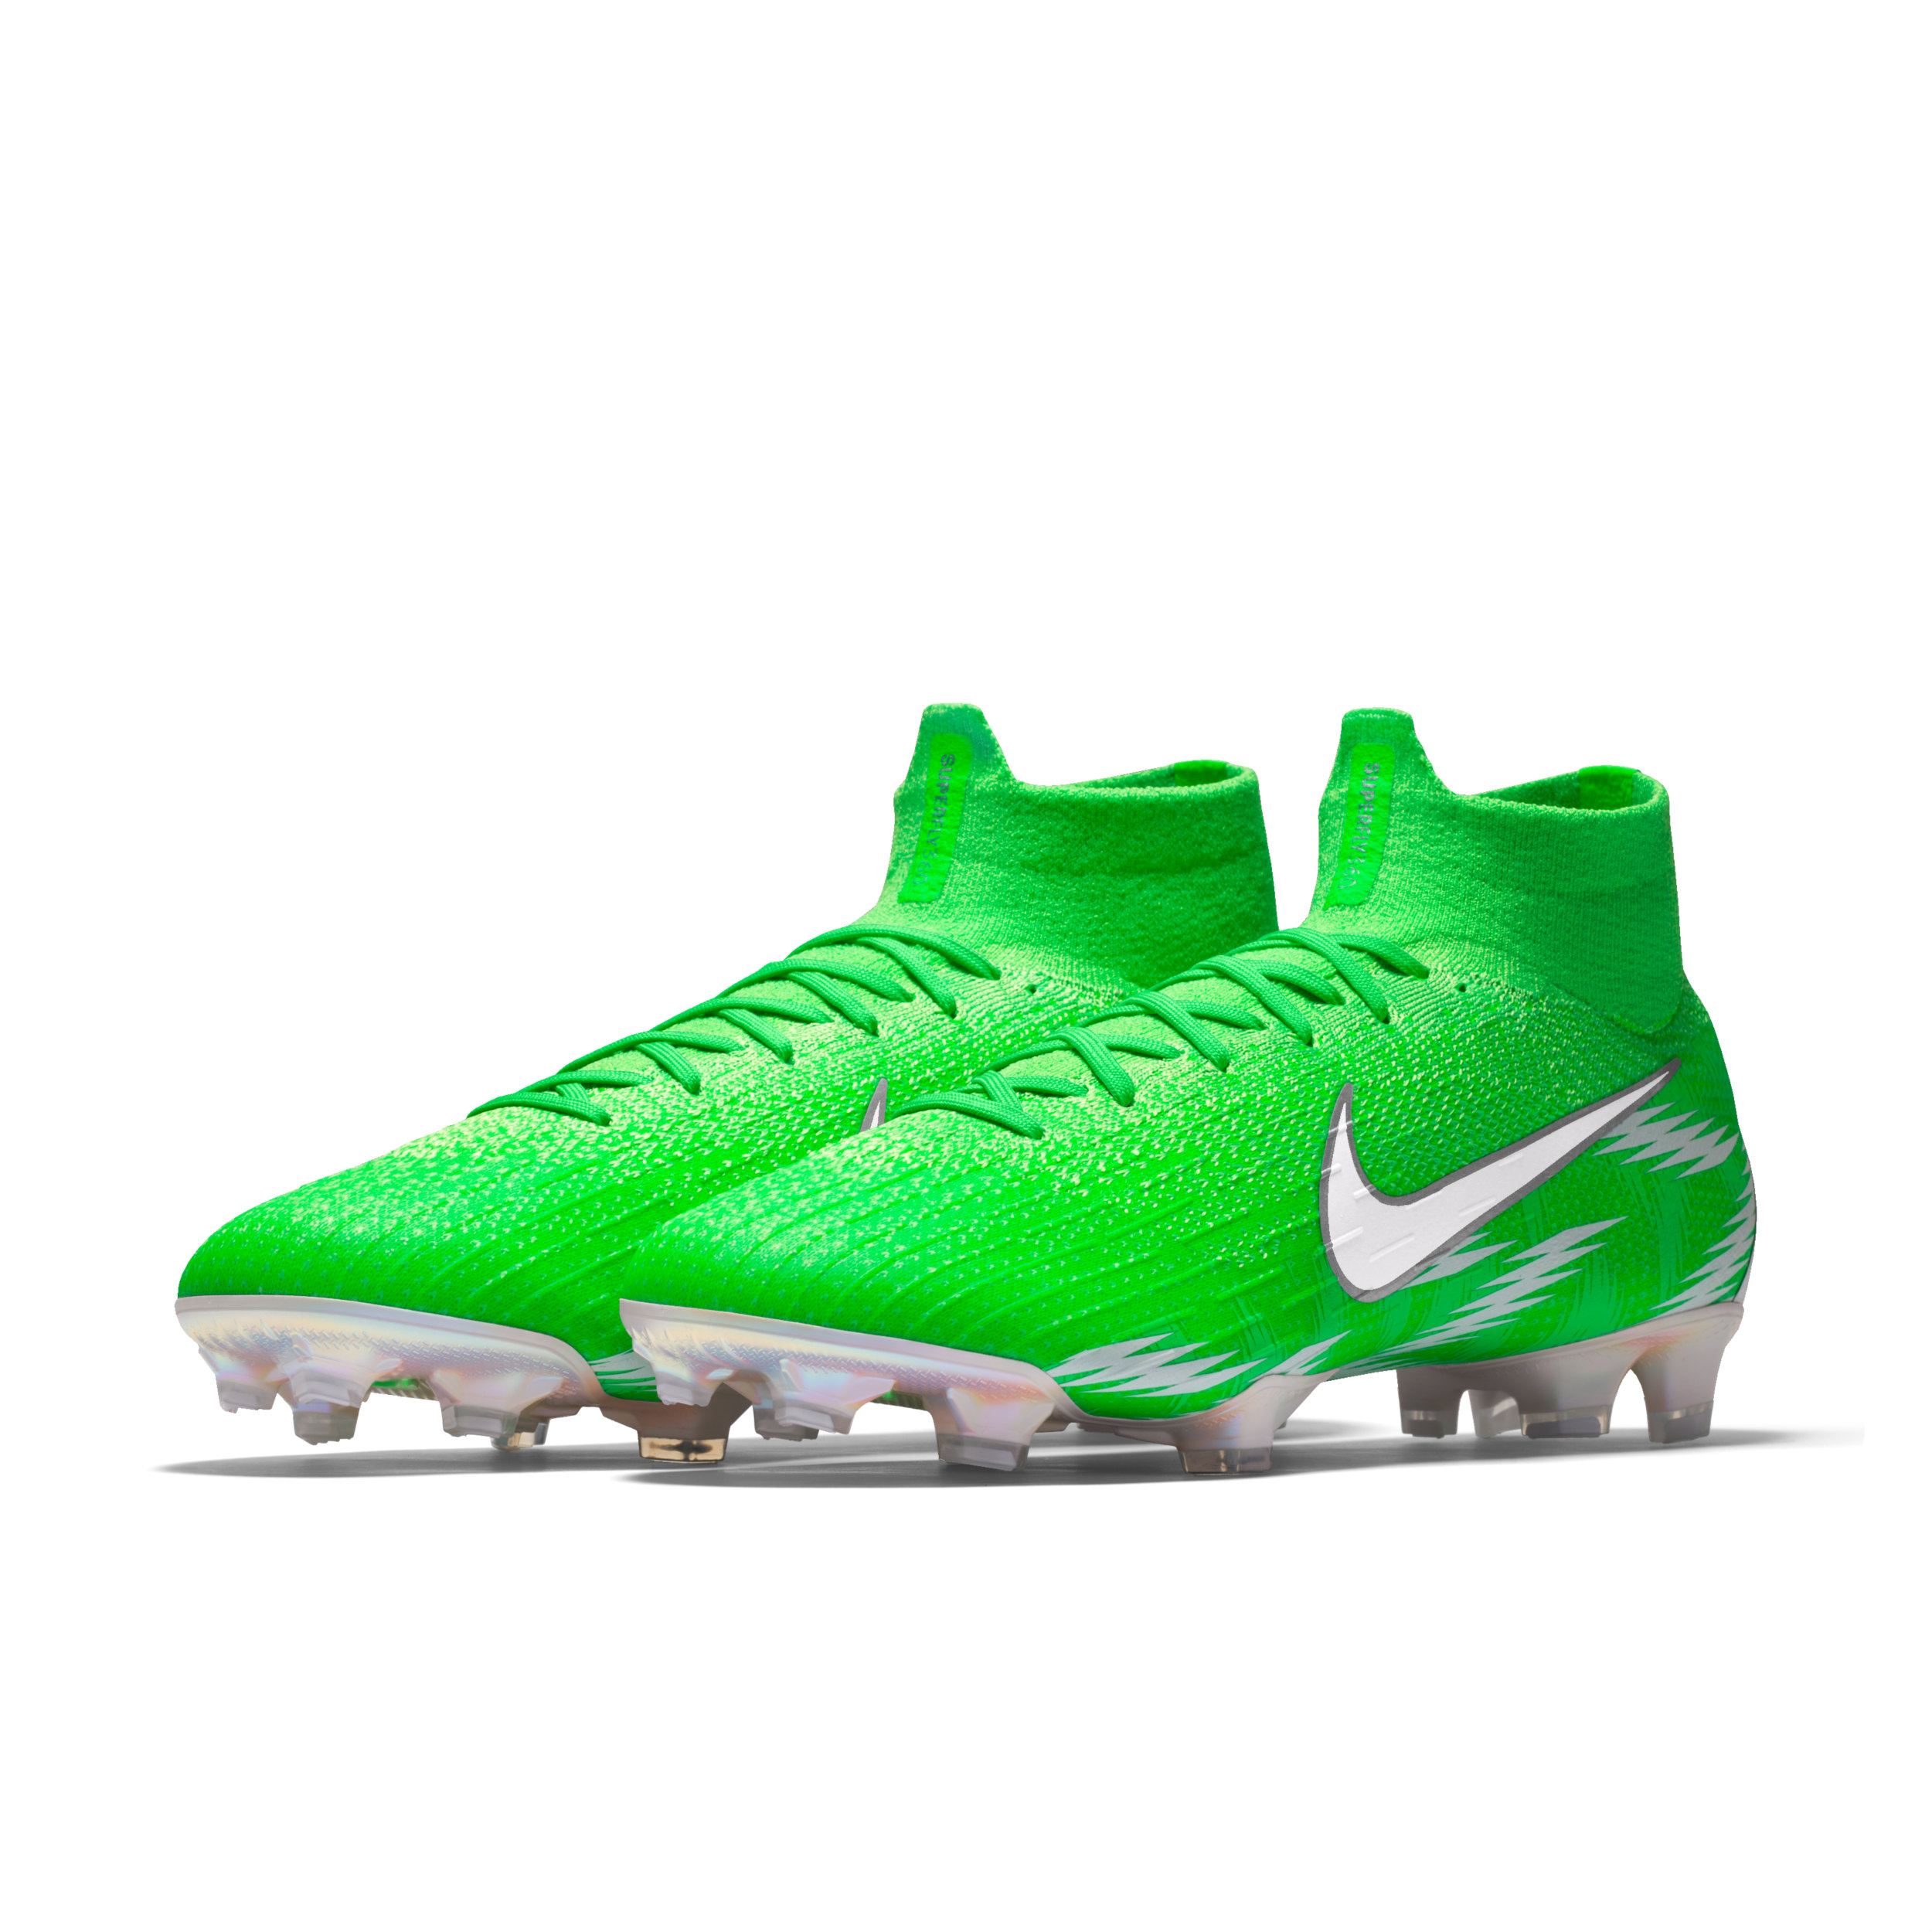 Nike Mercurial Vapor XI Motion Blur Pack SPT Football